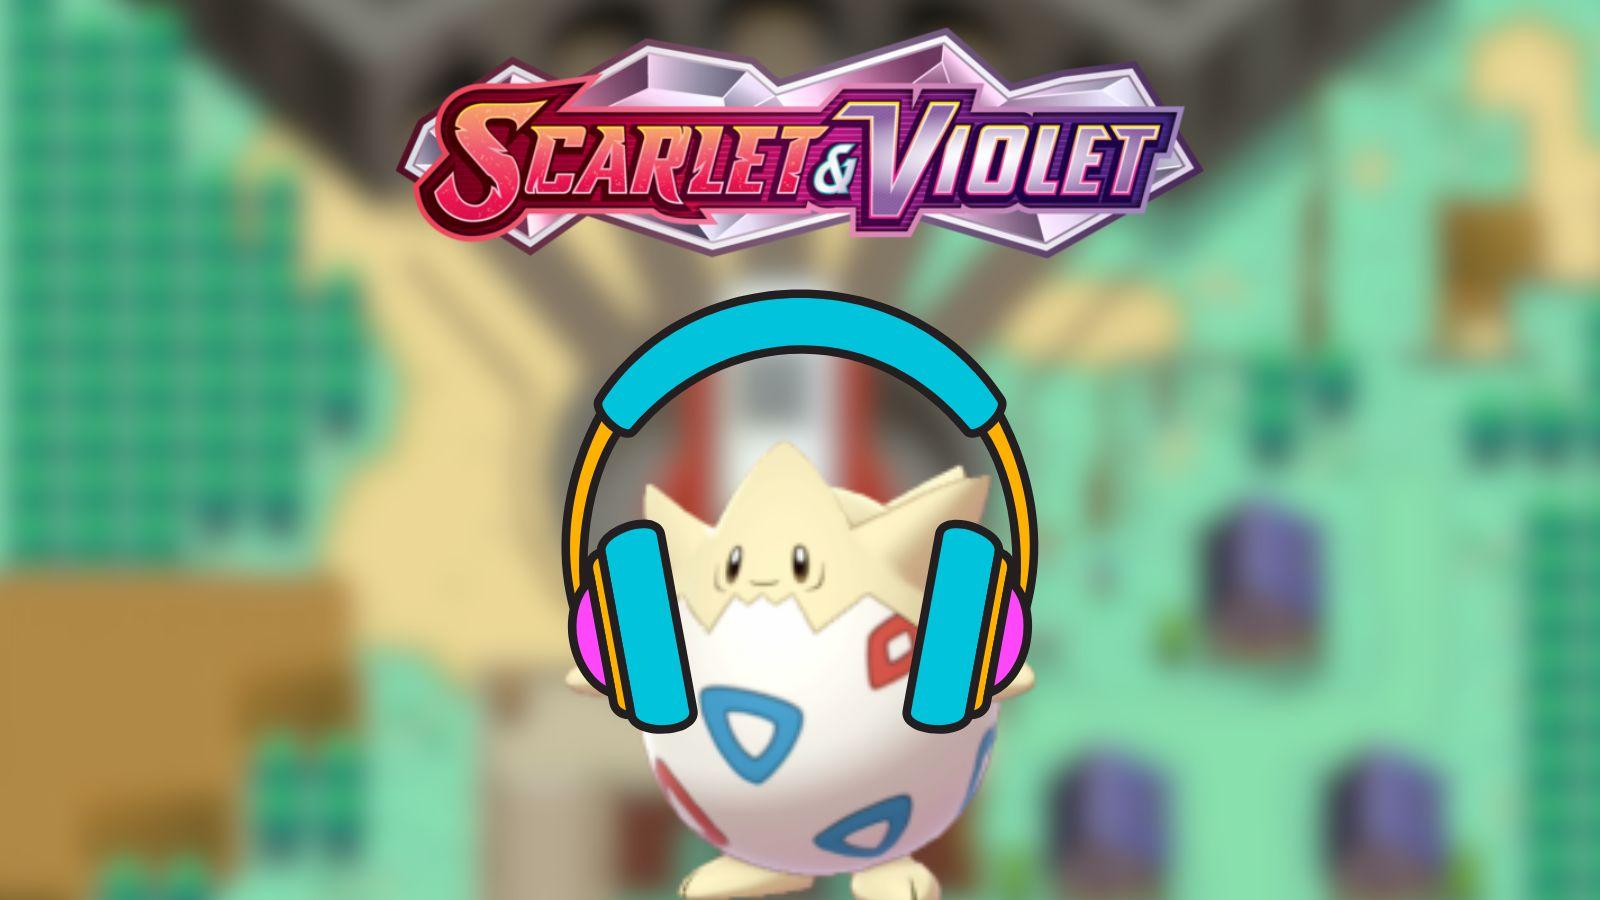 Pokémon Scarlet & Violet: Blueberry Pokédex, All Pokémon Locations In The  Indigo Disk DLC